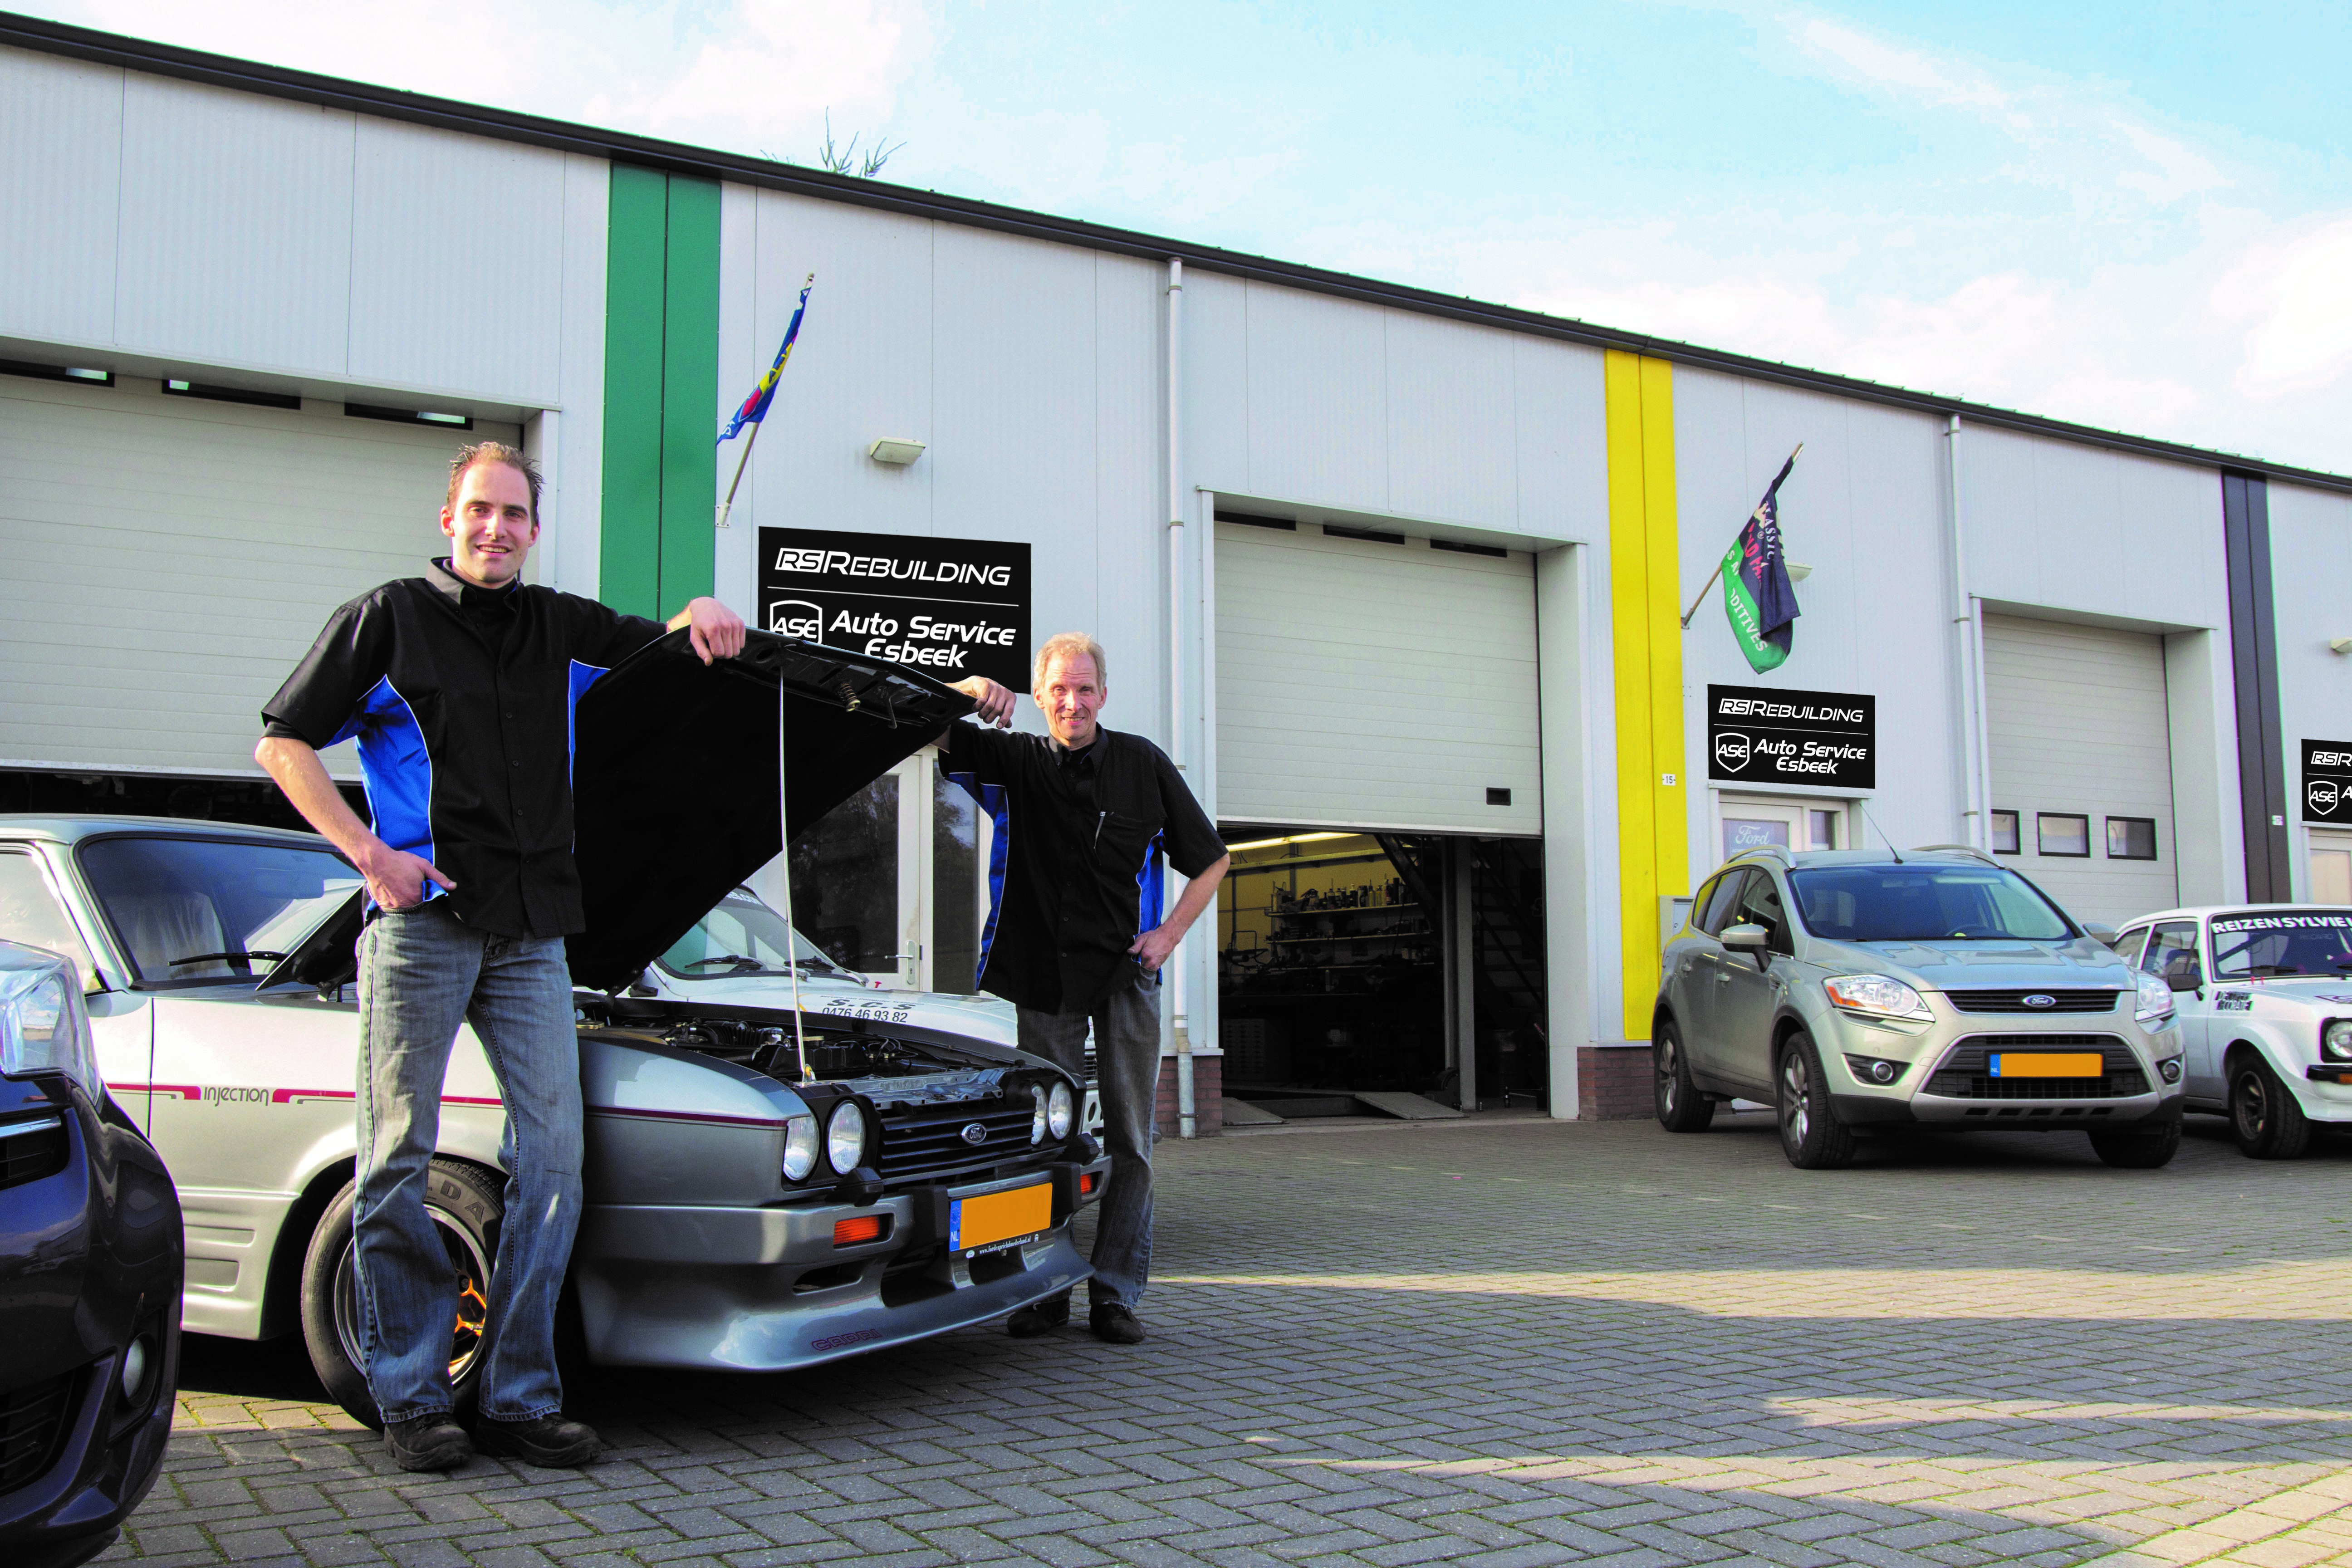 Auto garage haghorst - henk-bas-auto-service-esbeek-reparatie-apk-onderhoud-revisie-restauratie